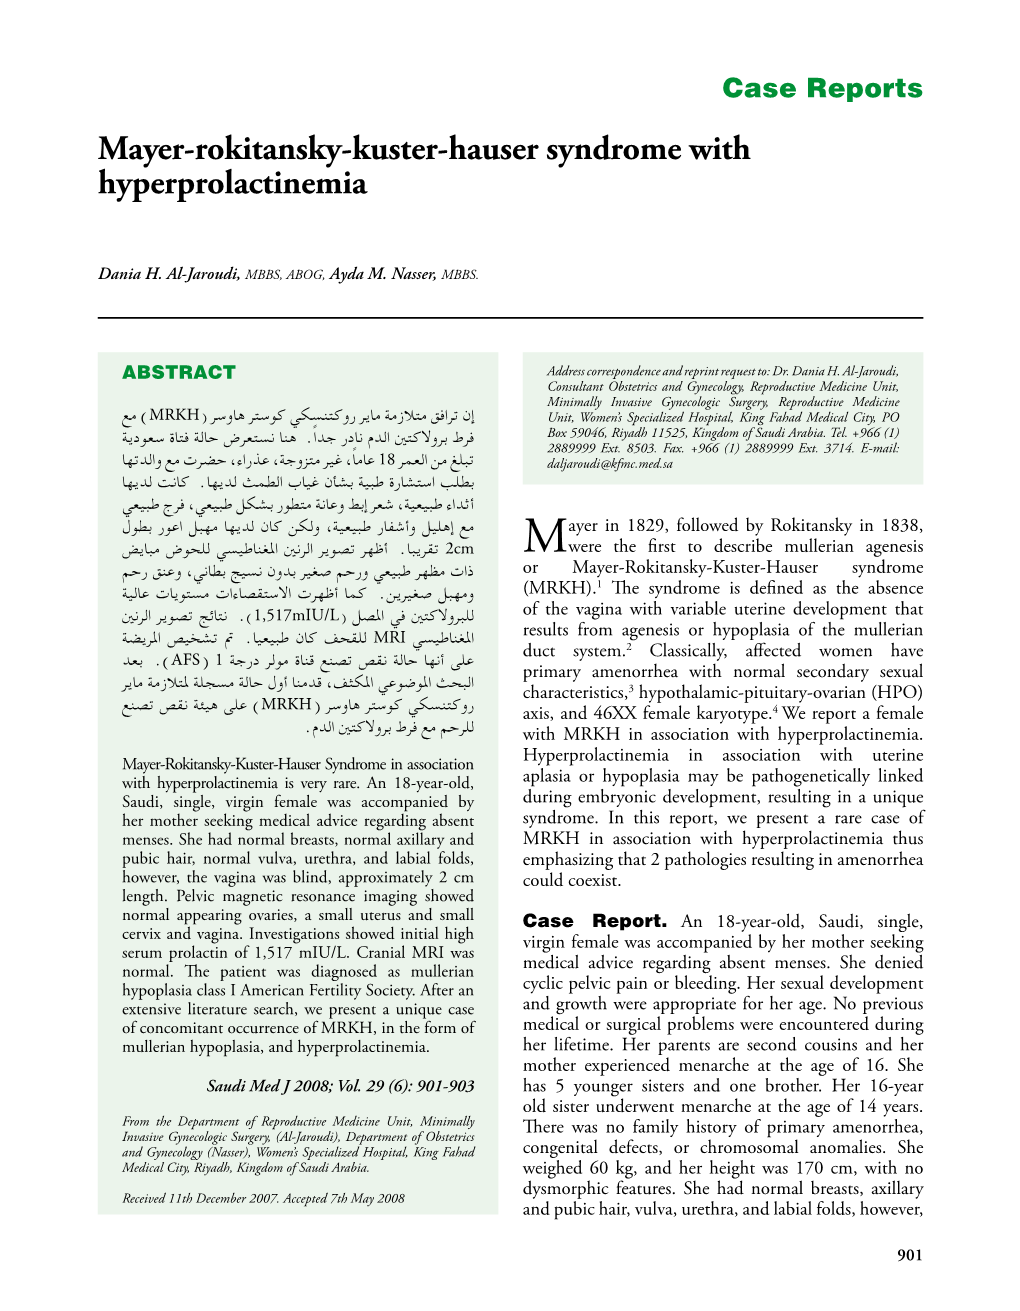 Mayer-Rokitansky-Kuster-Hauser Syndrome with Hyperprolactinemia